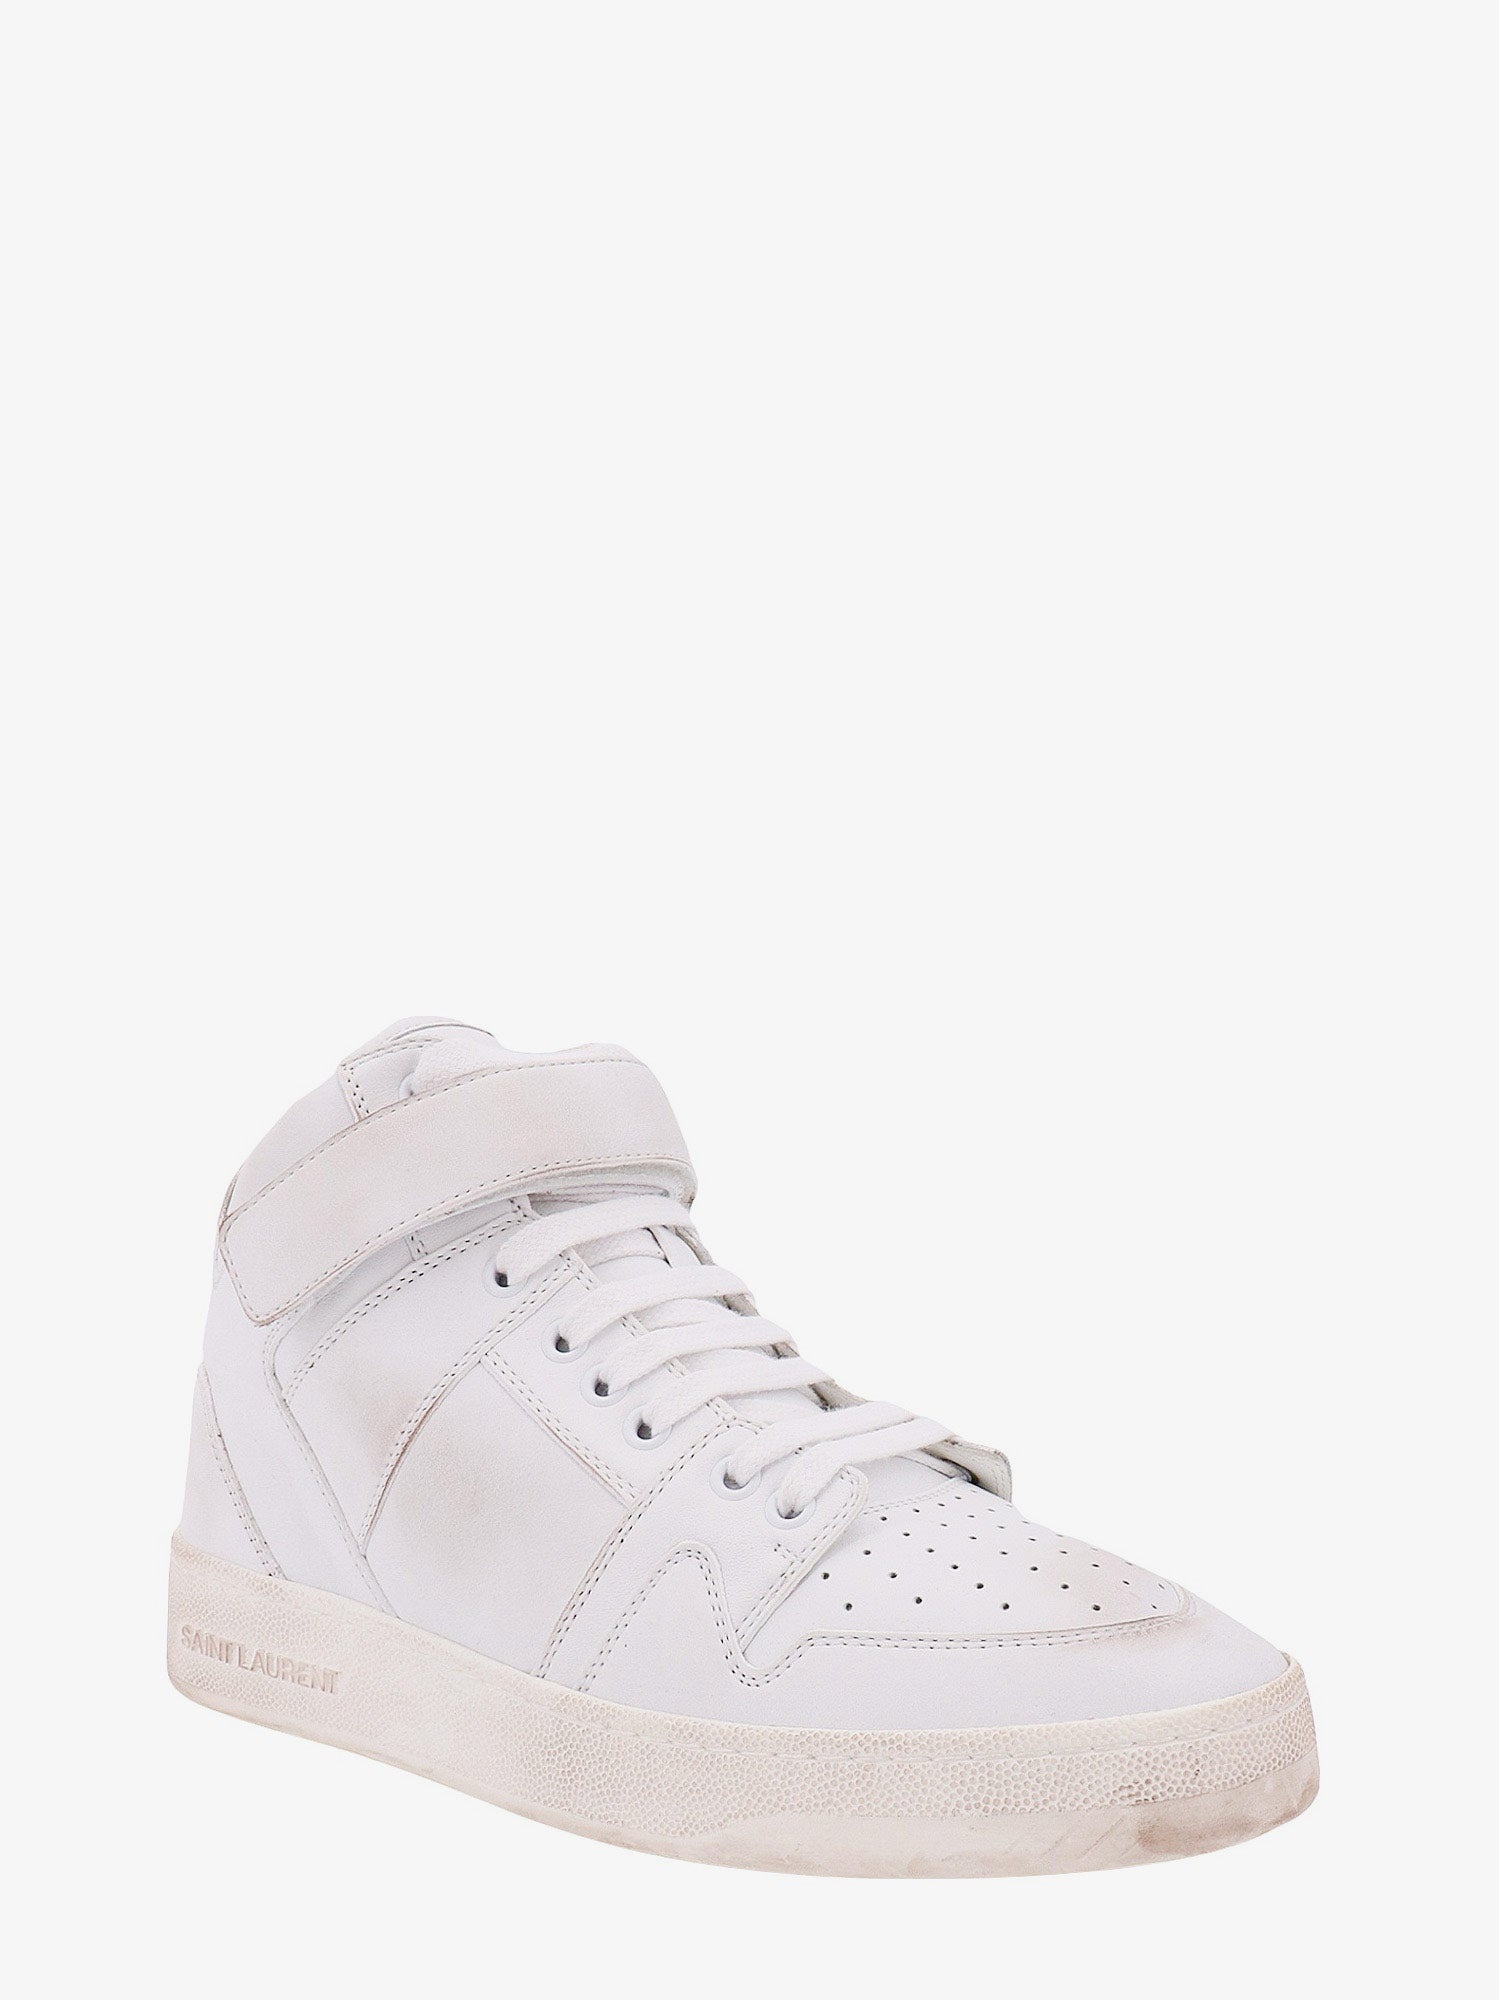 Saint Laurent Man Lax Man White Sneakers - 2